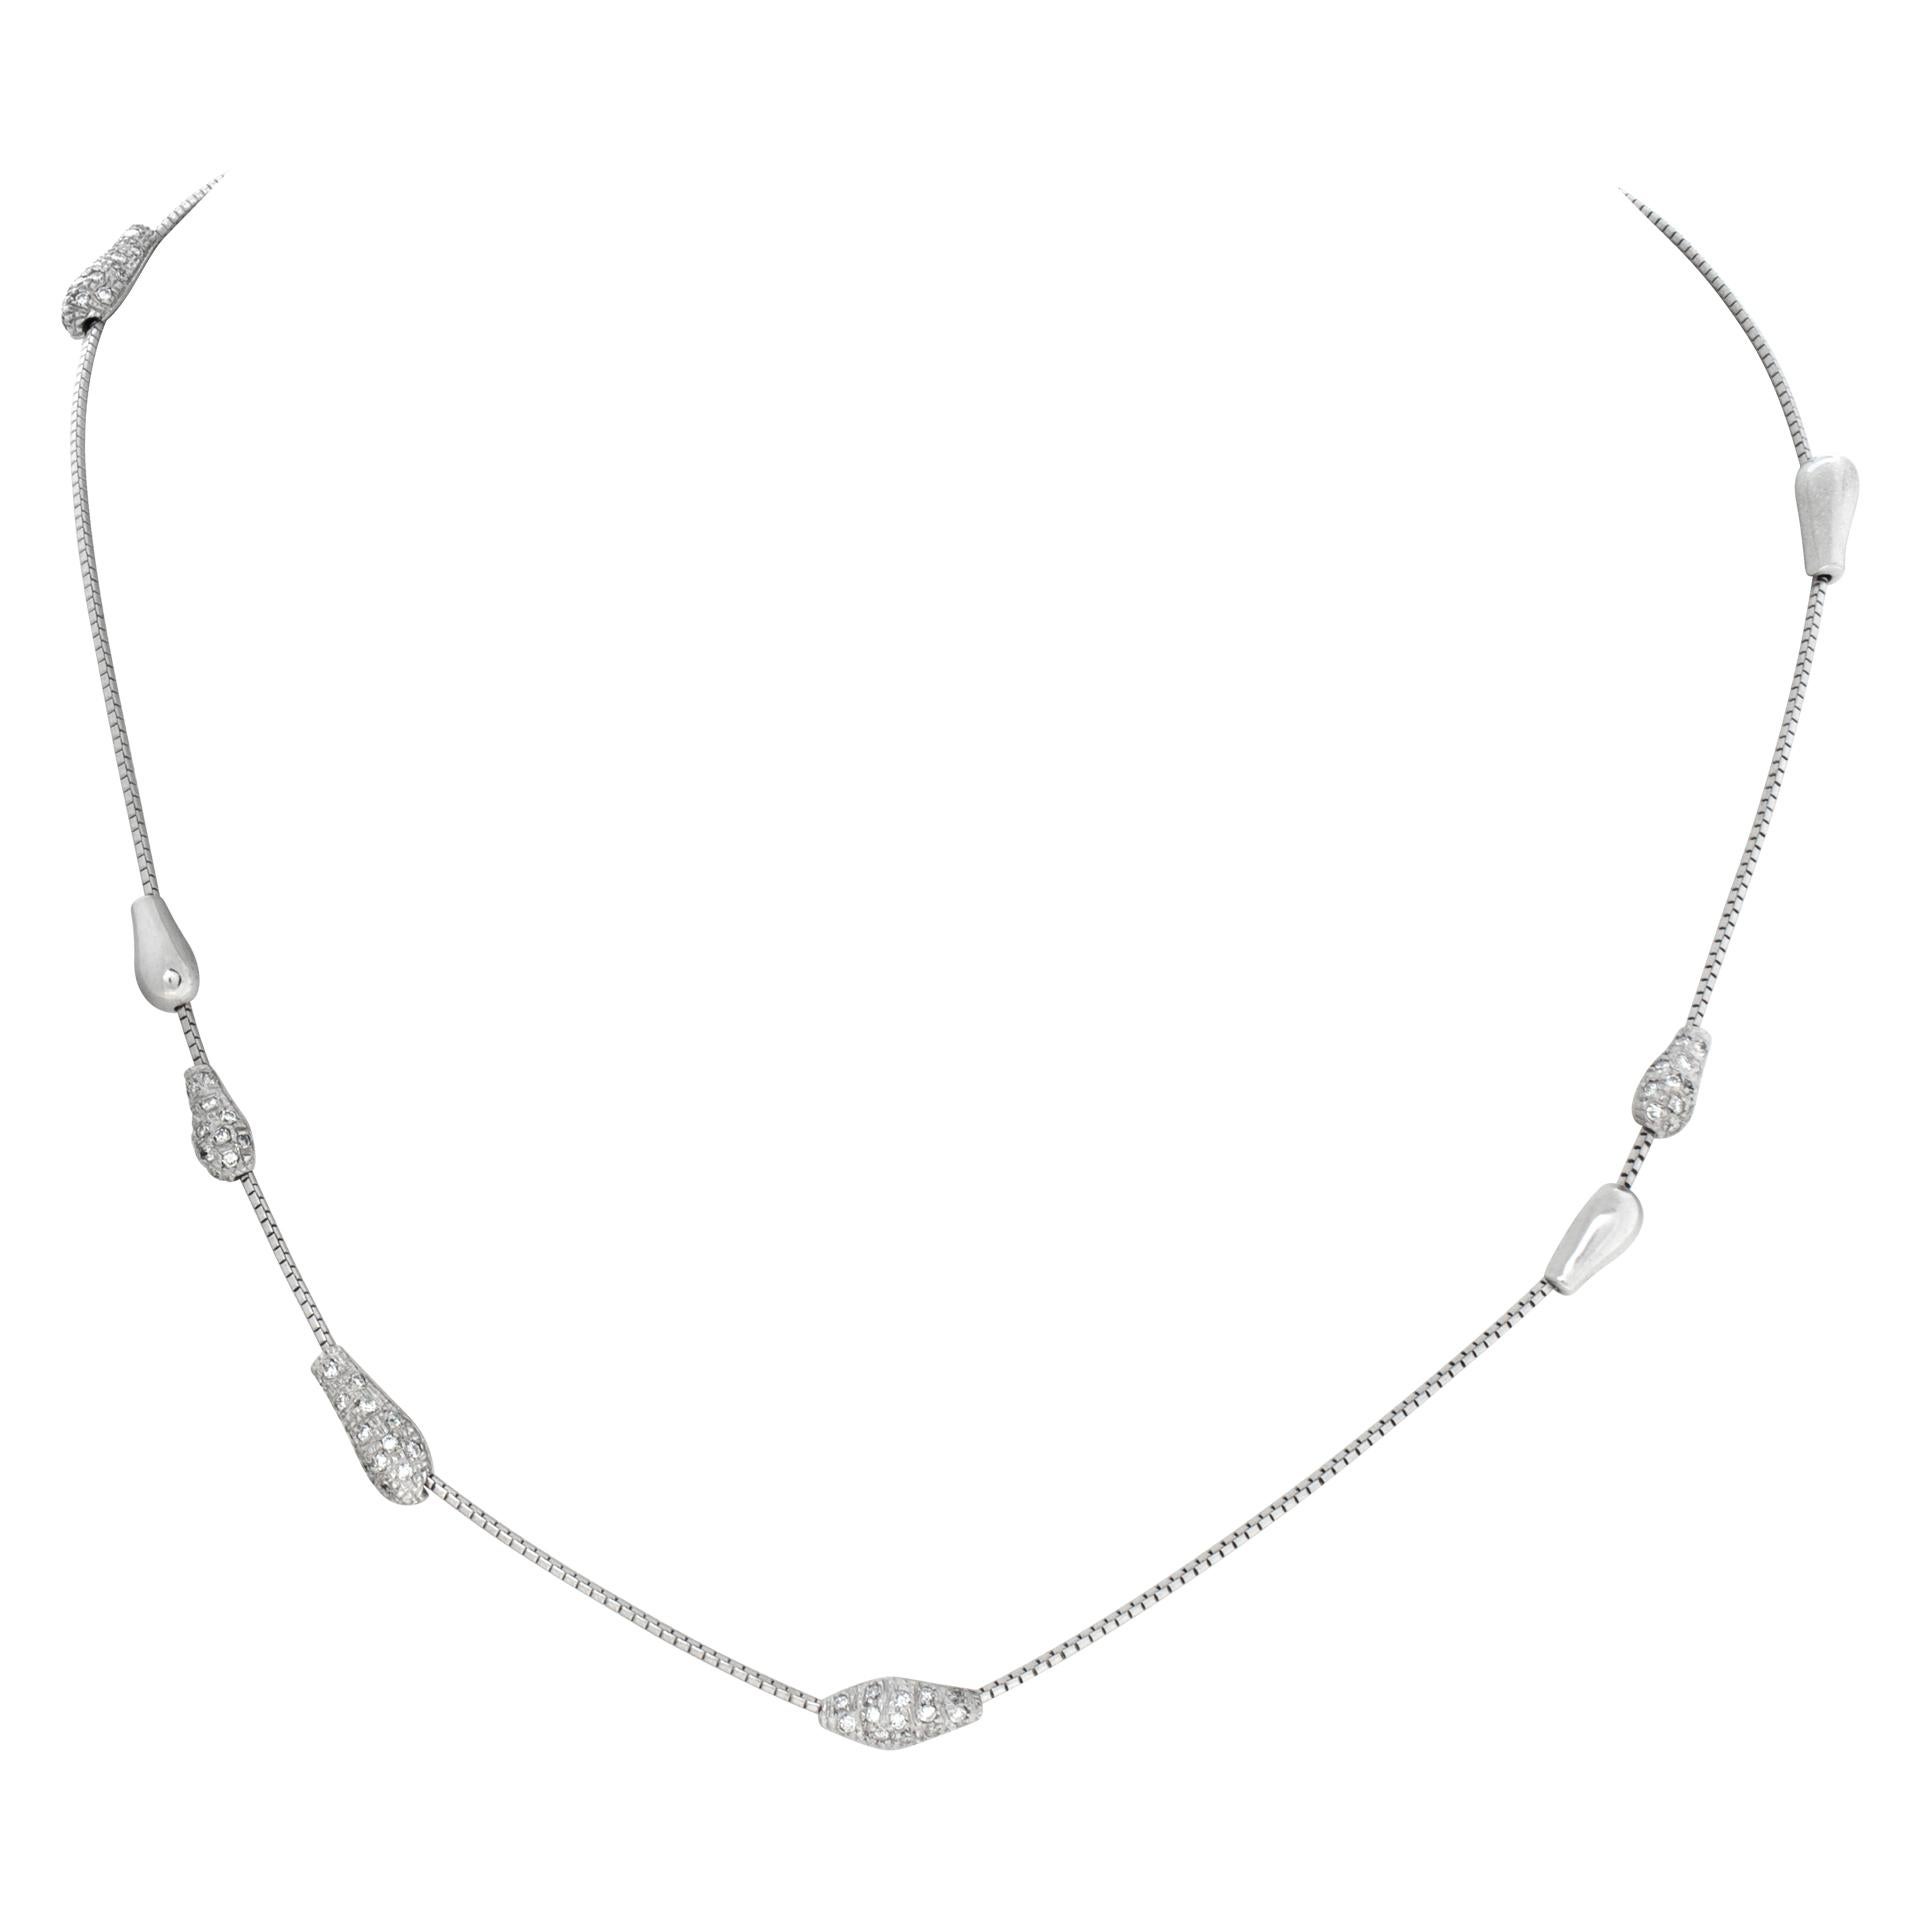 Designer Signed Henry Stern 18k White Gold Diamonds Necklace For Sale